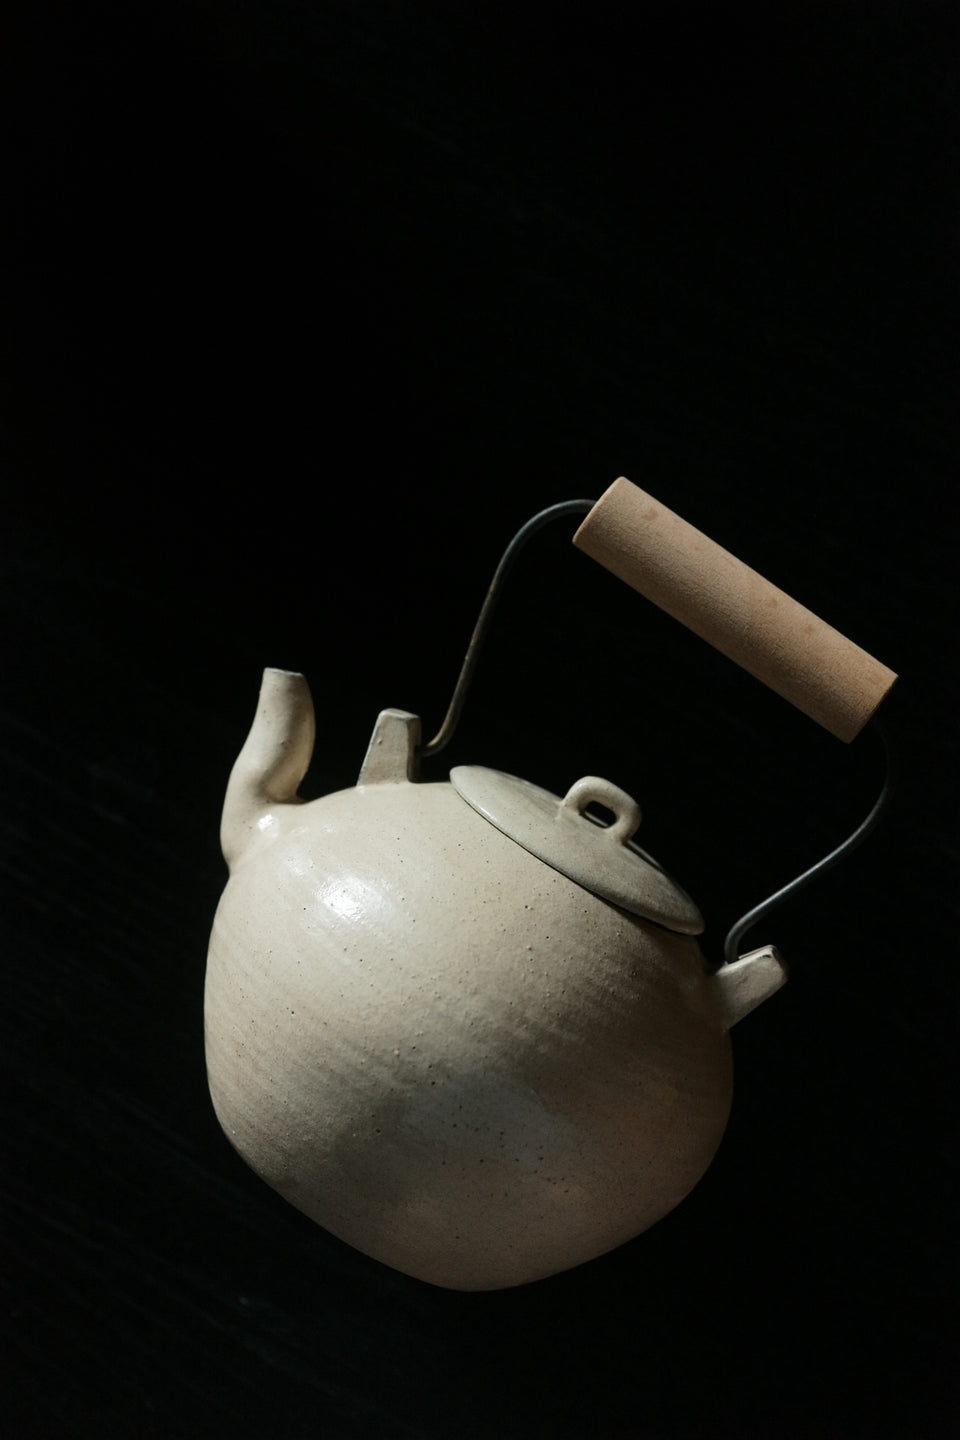 Wood-Handled White Powder Glaze Clay Tea Kettle